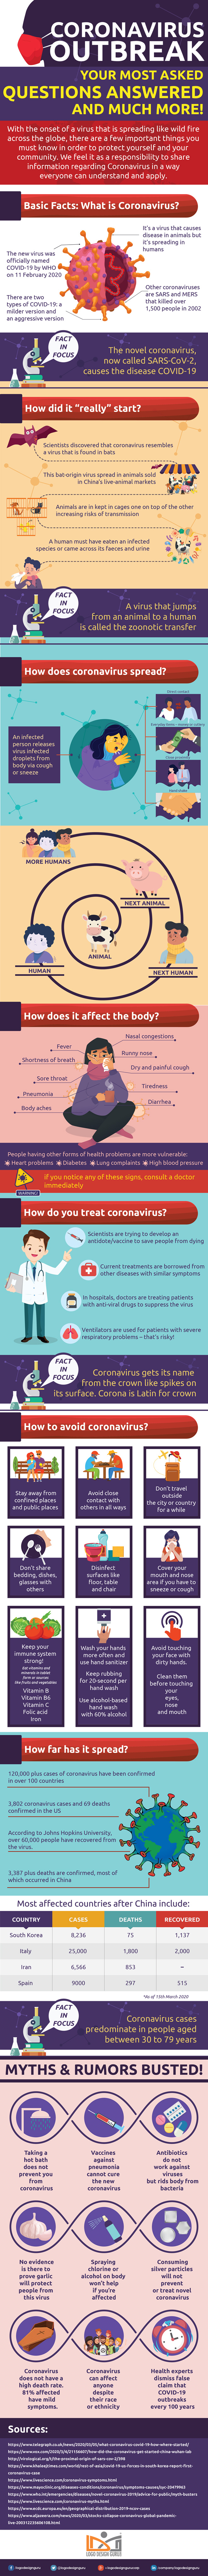 Novel Coronavirus: All About COVID-19